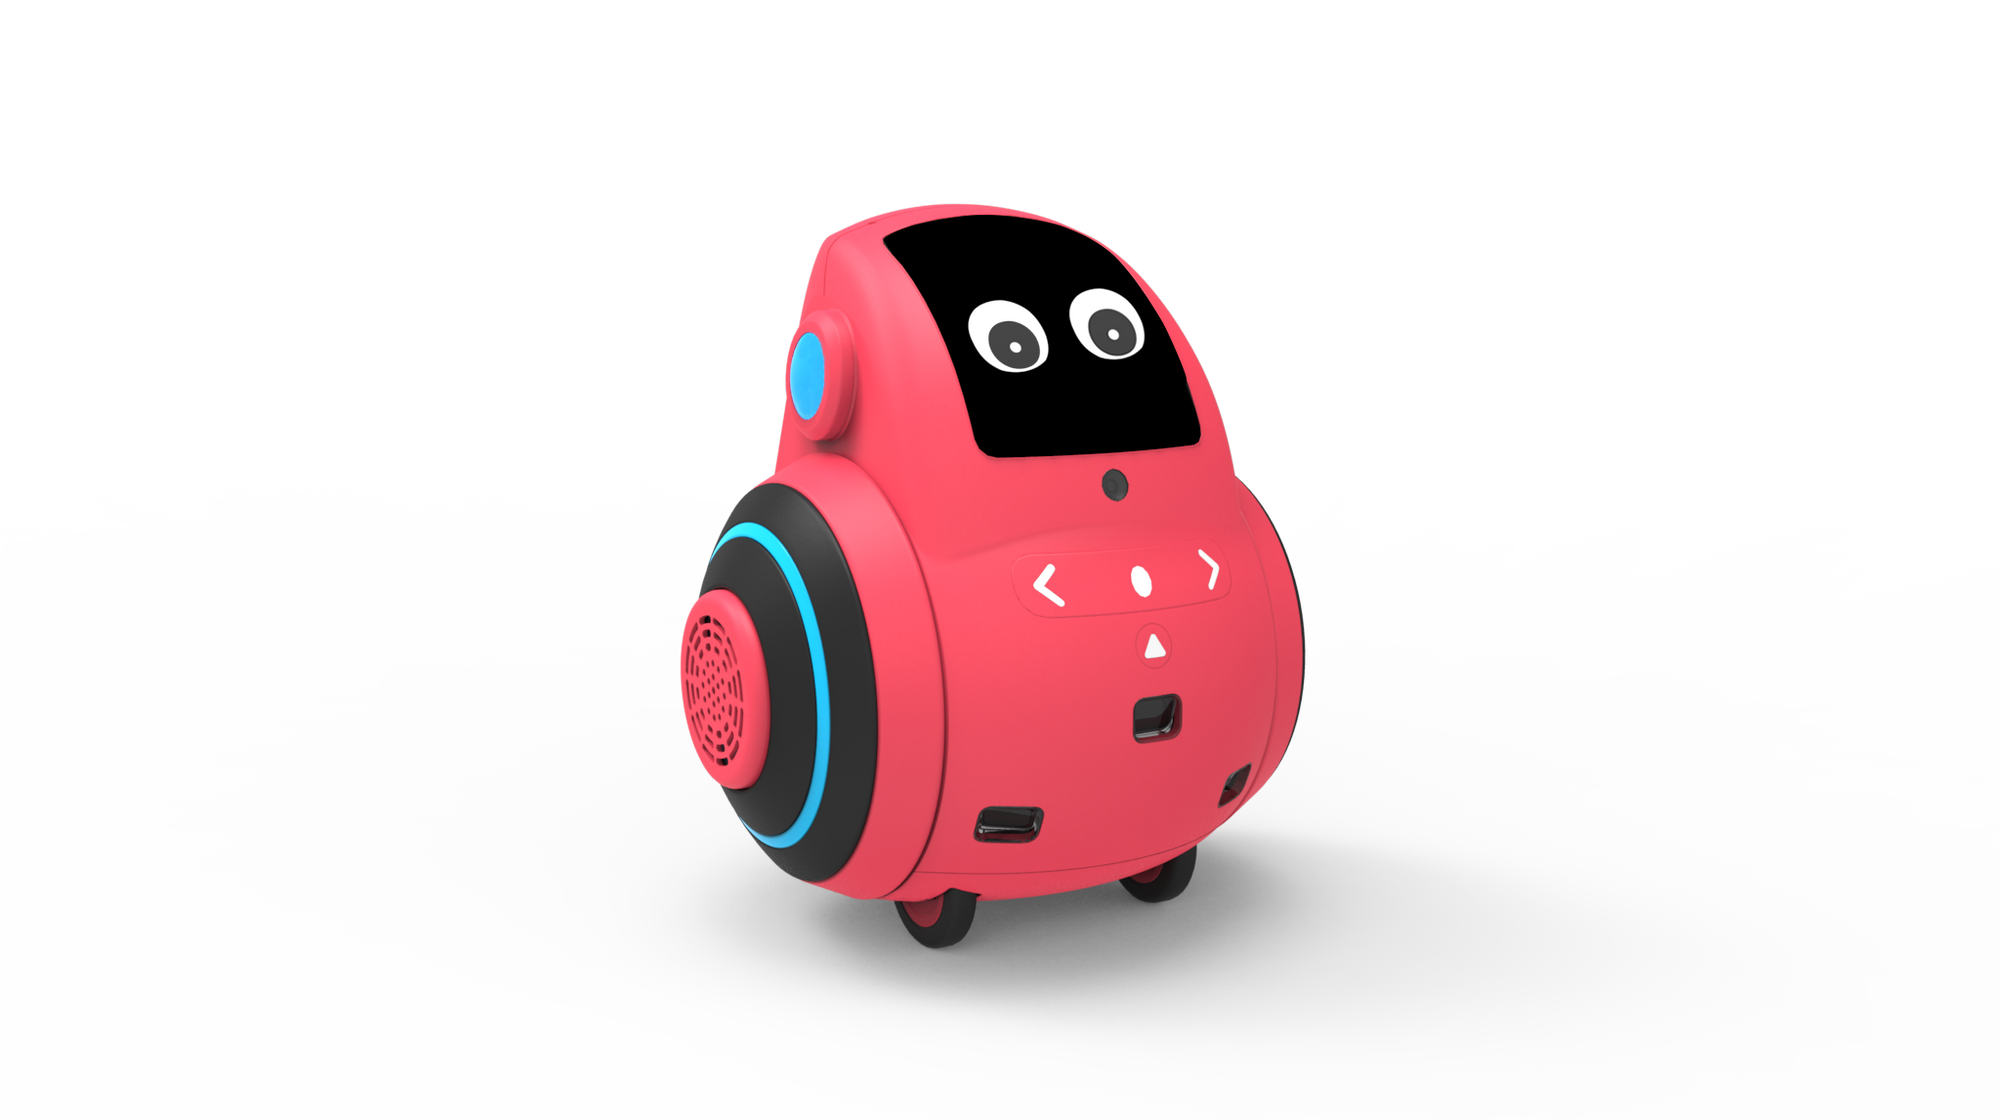 Miko 2 AI robot for kids now offers Hindi mode : The Tribune India